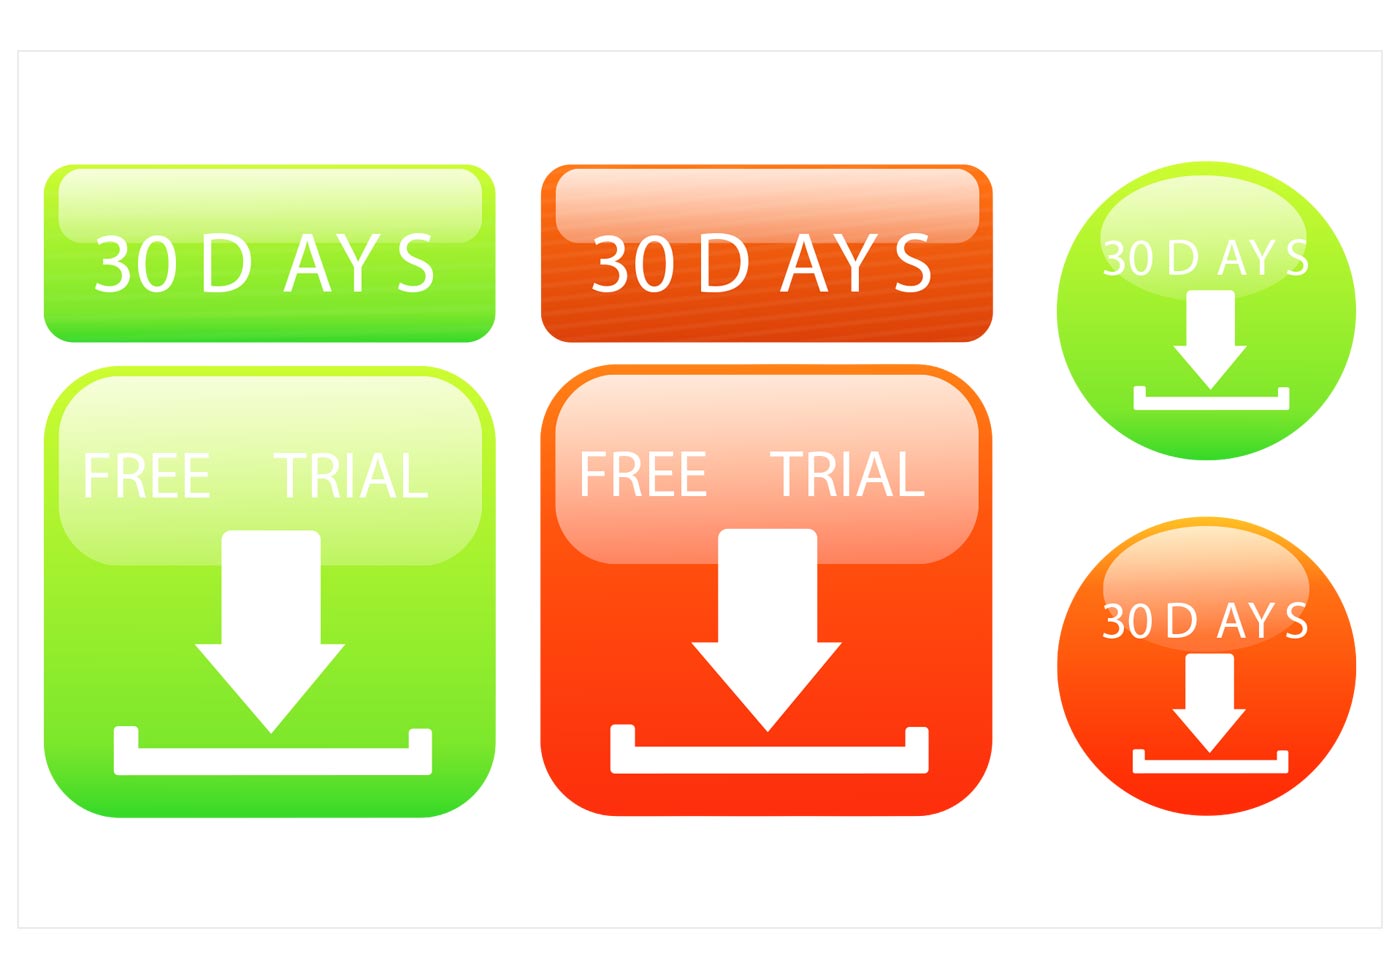 idm free trial 30 days